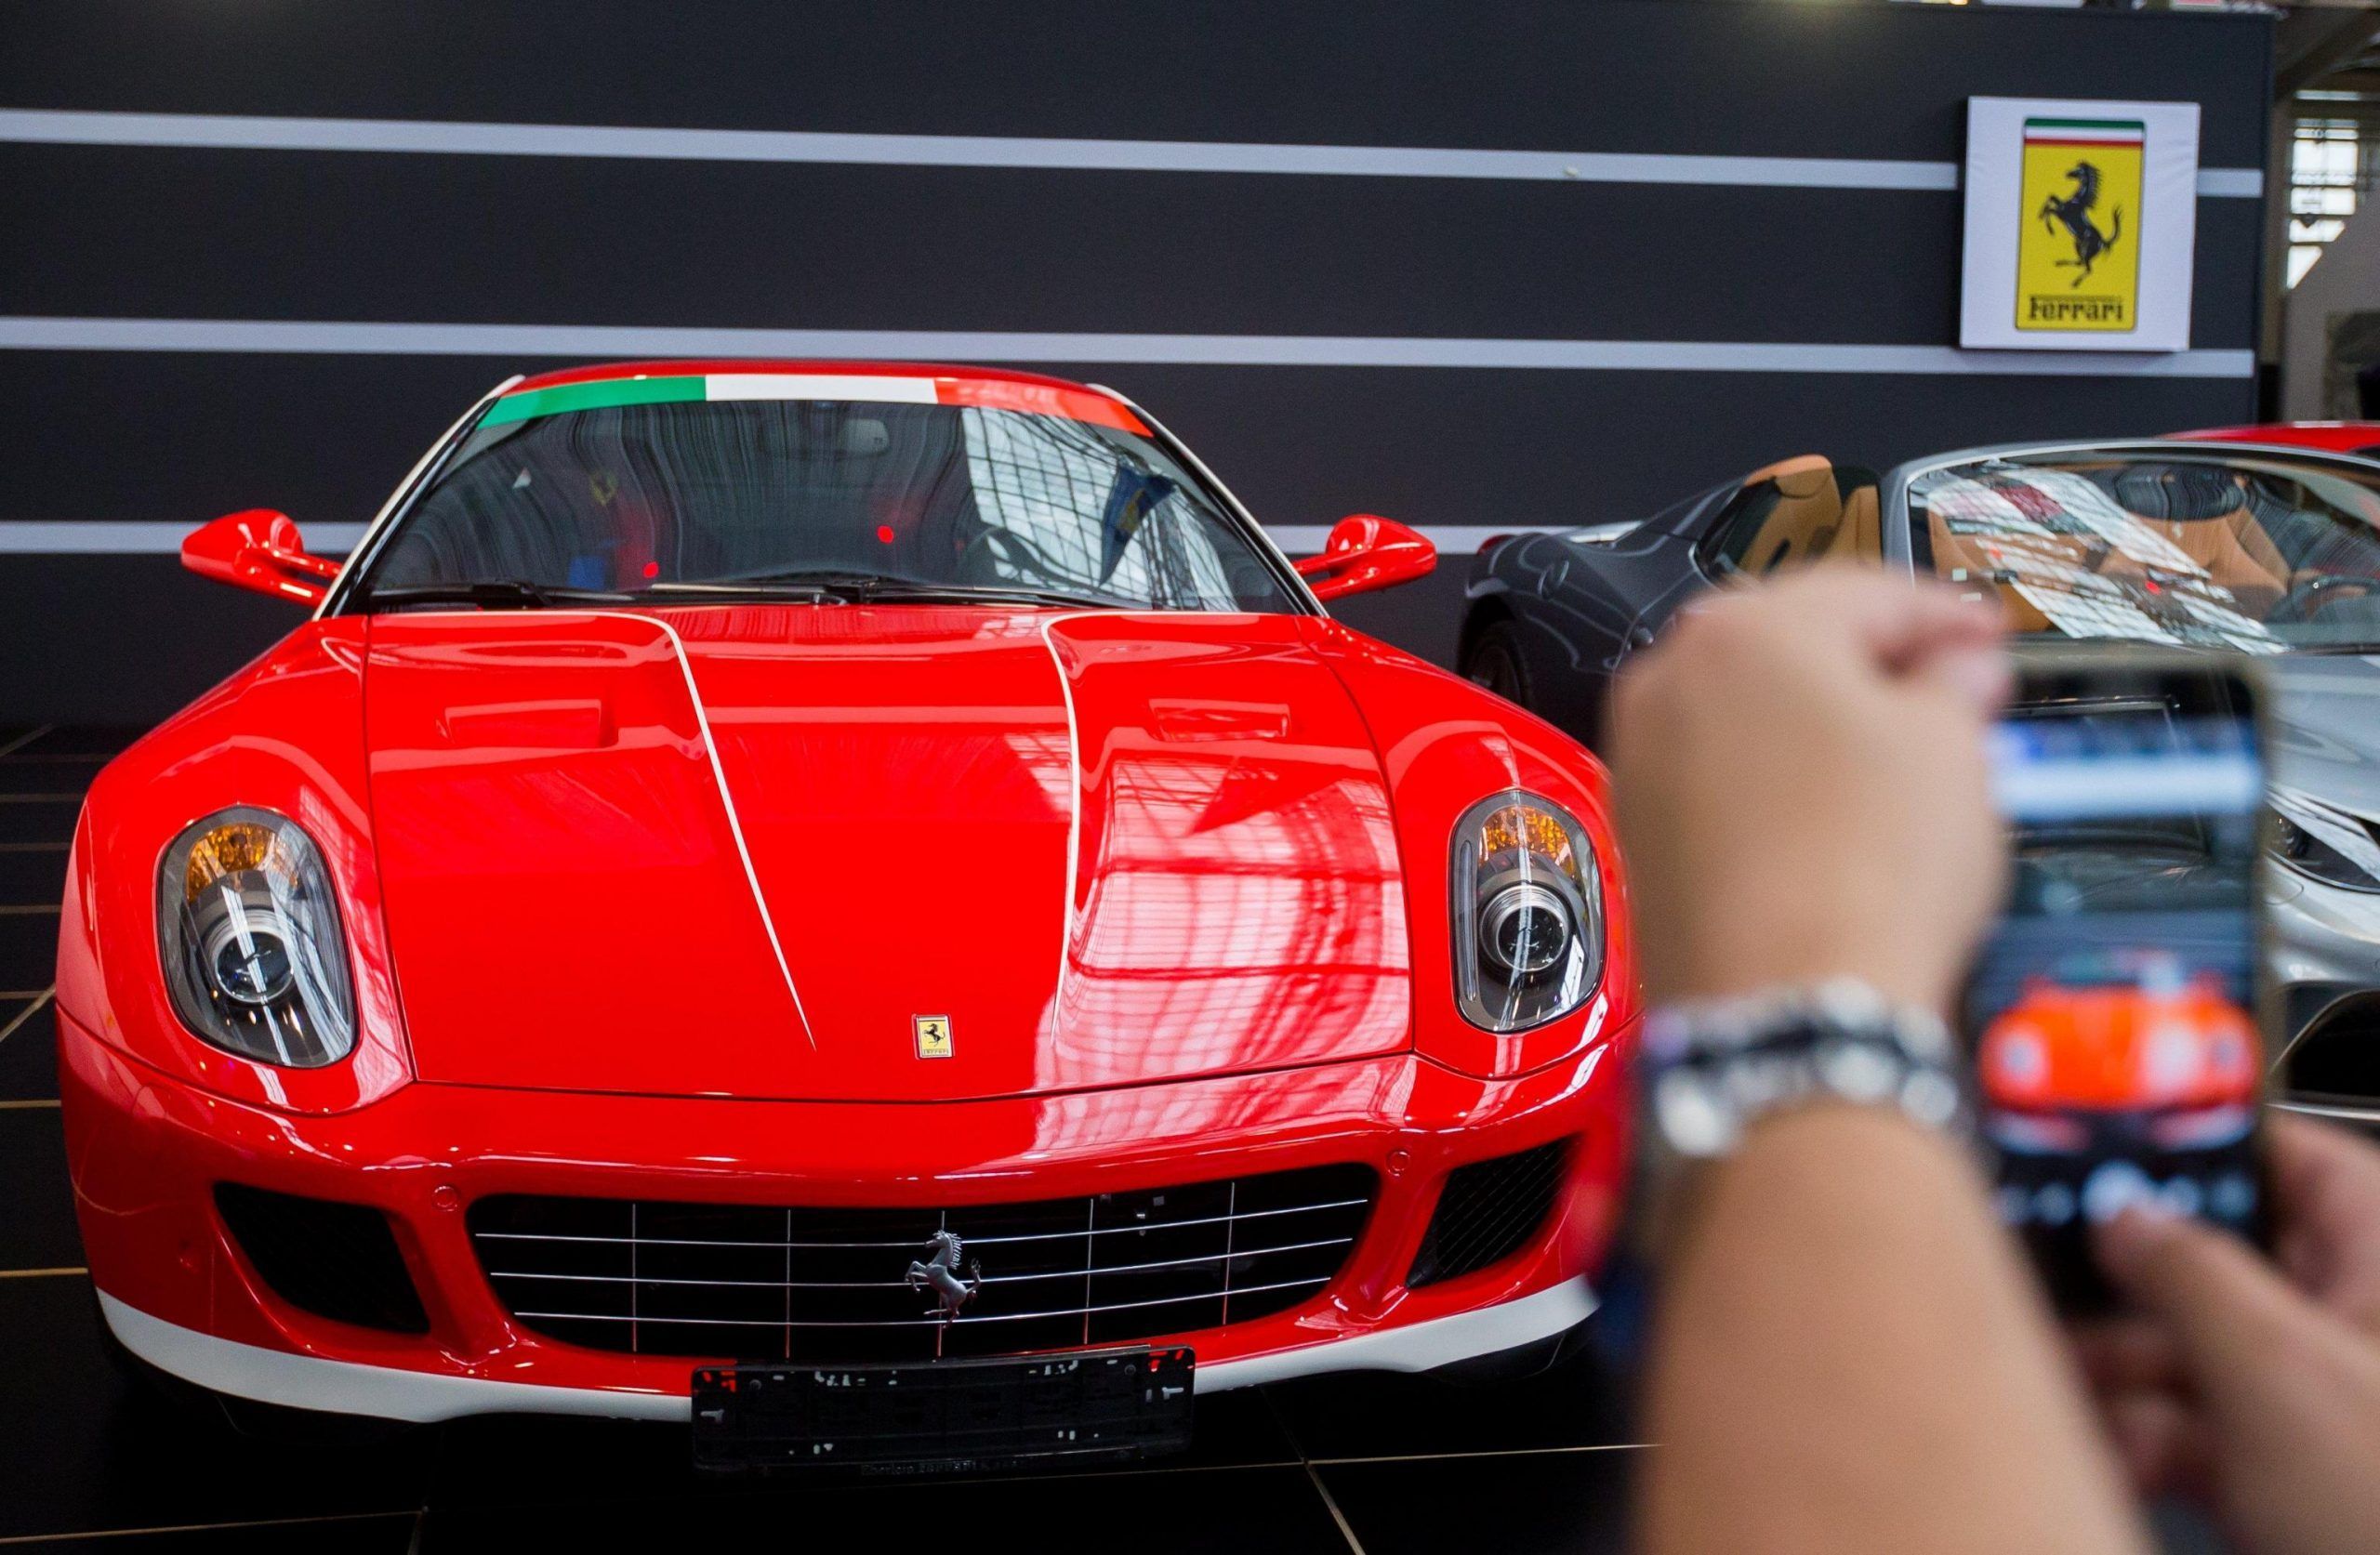 Exhibition for the 70th anniversary of Ferrari